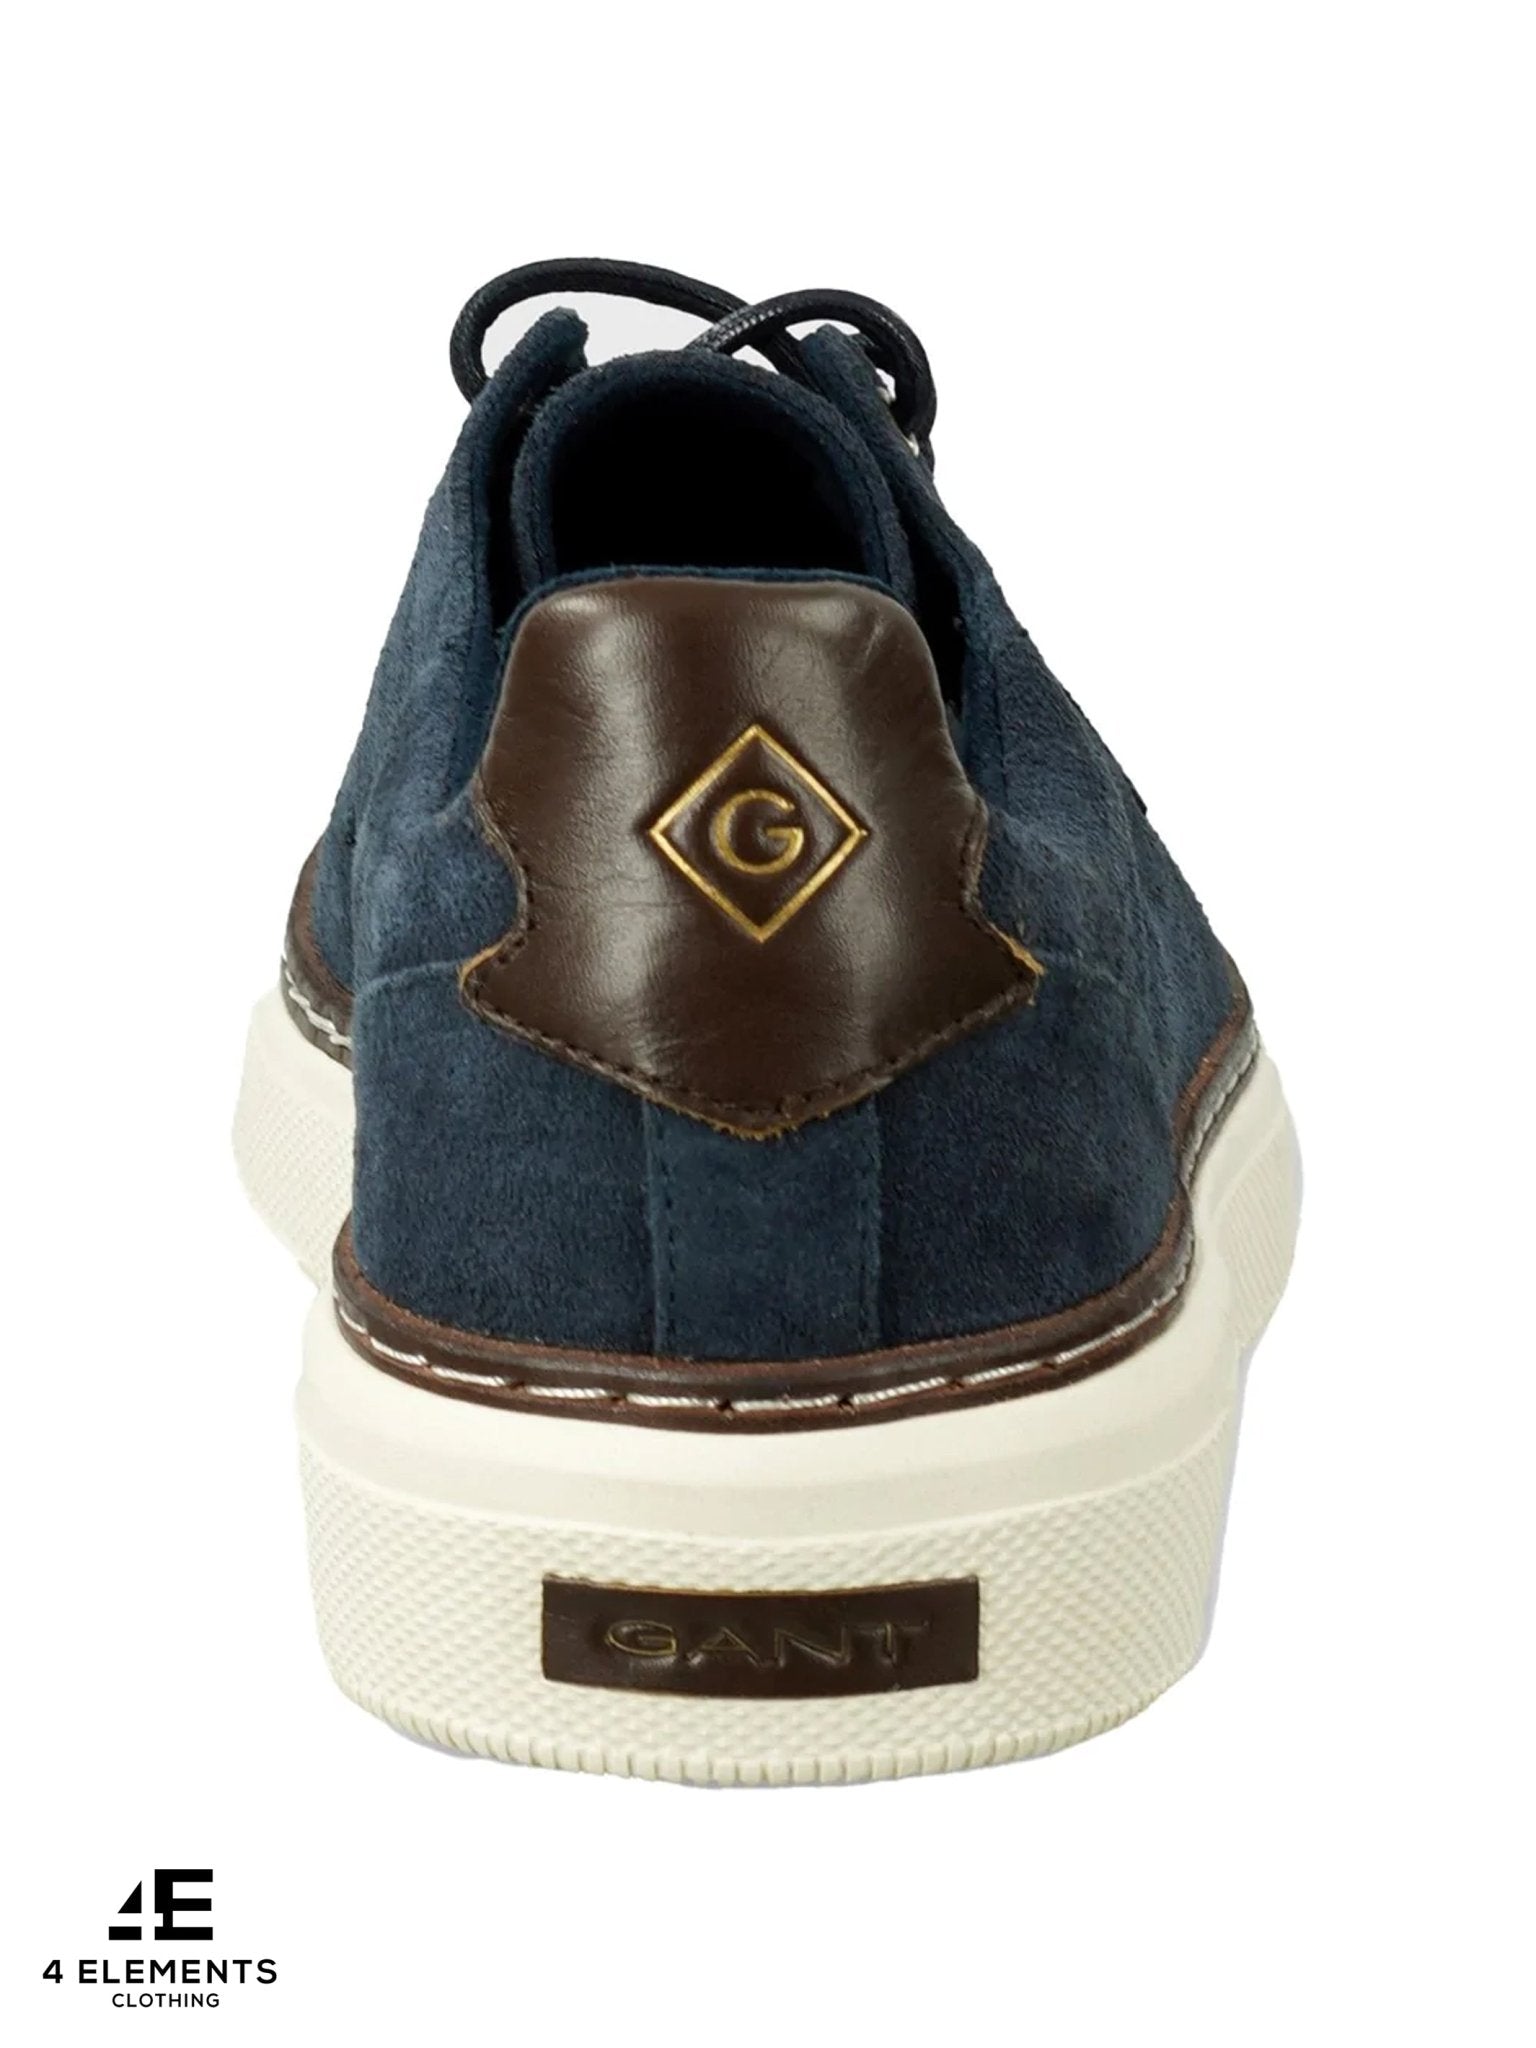 GANT GANT - San Prep Low Premium Leather mens trainer / Gant Sneaker Shoes